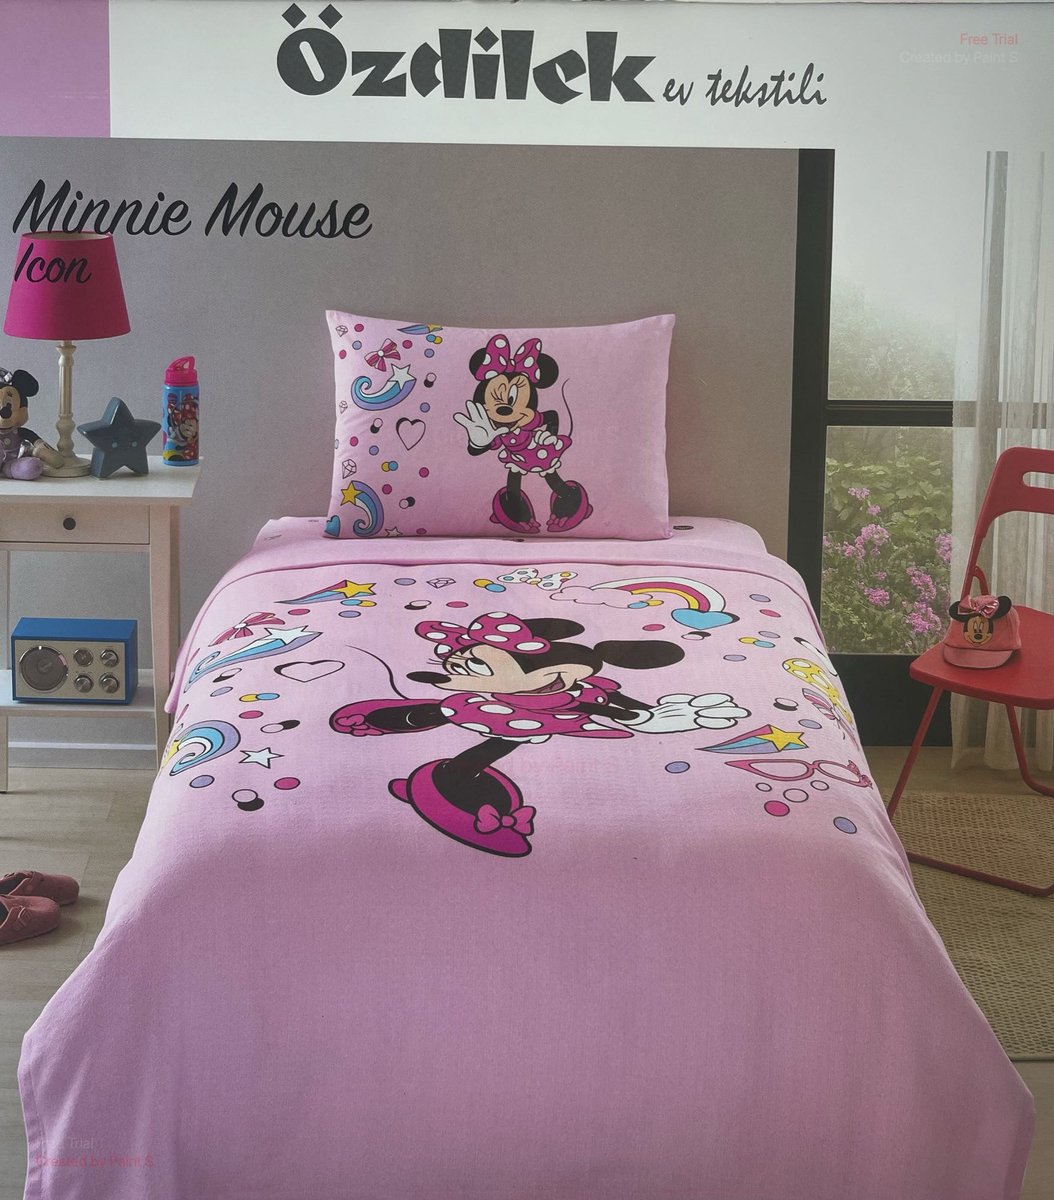 Calla Lily - Ozdilek Disney Minnie Mouse Beddengoed ingesteld